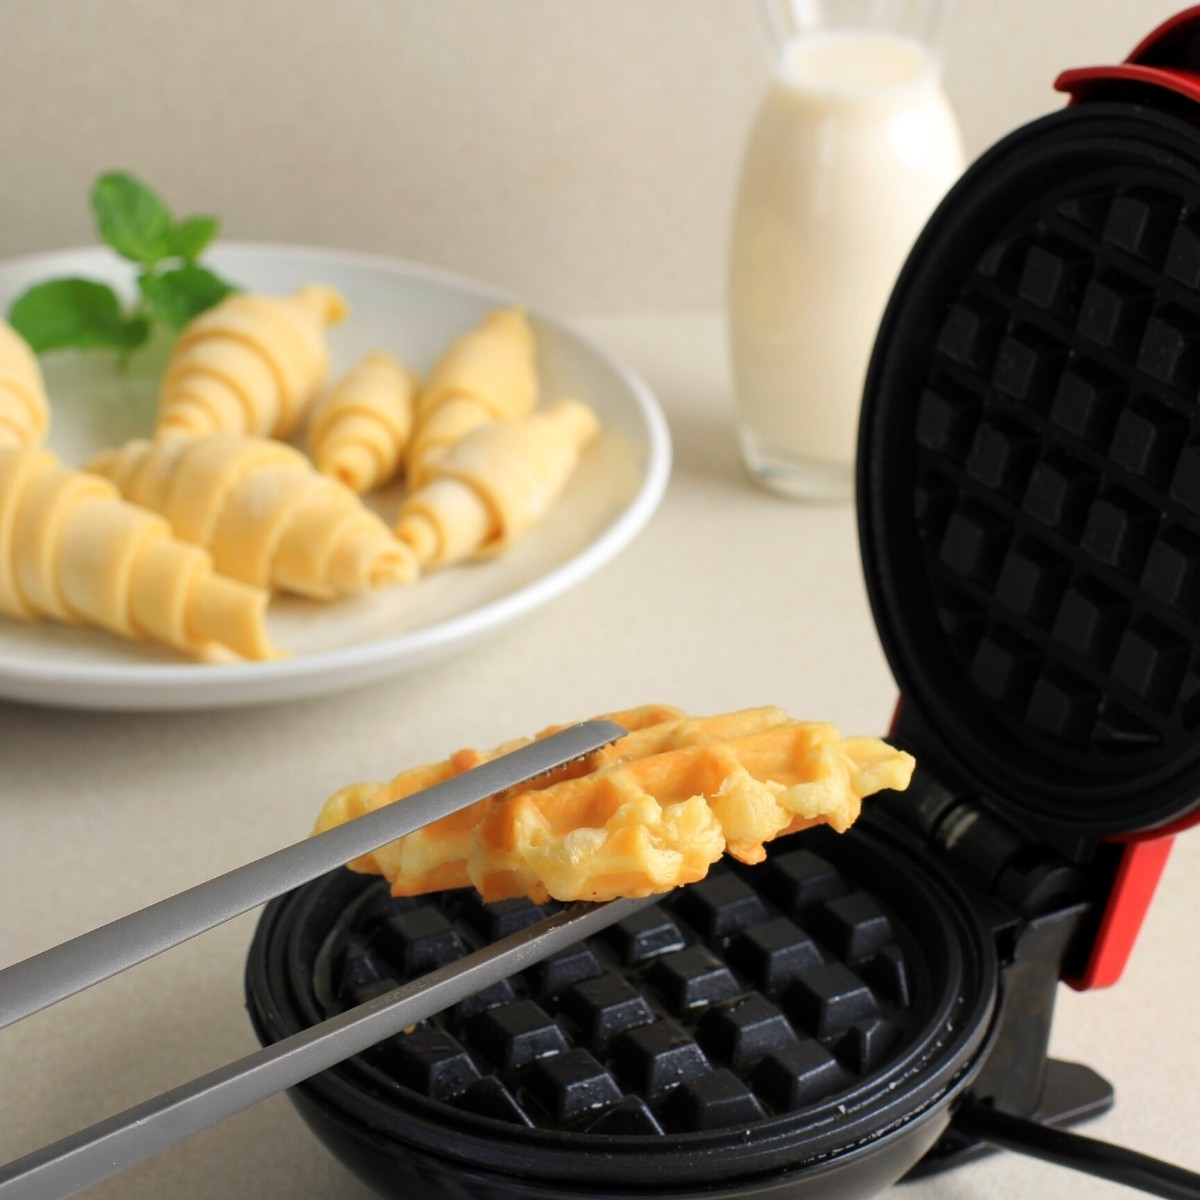 Homemade Croffle Recipe (Croissant Waffles)